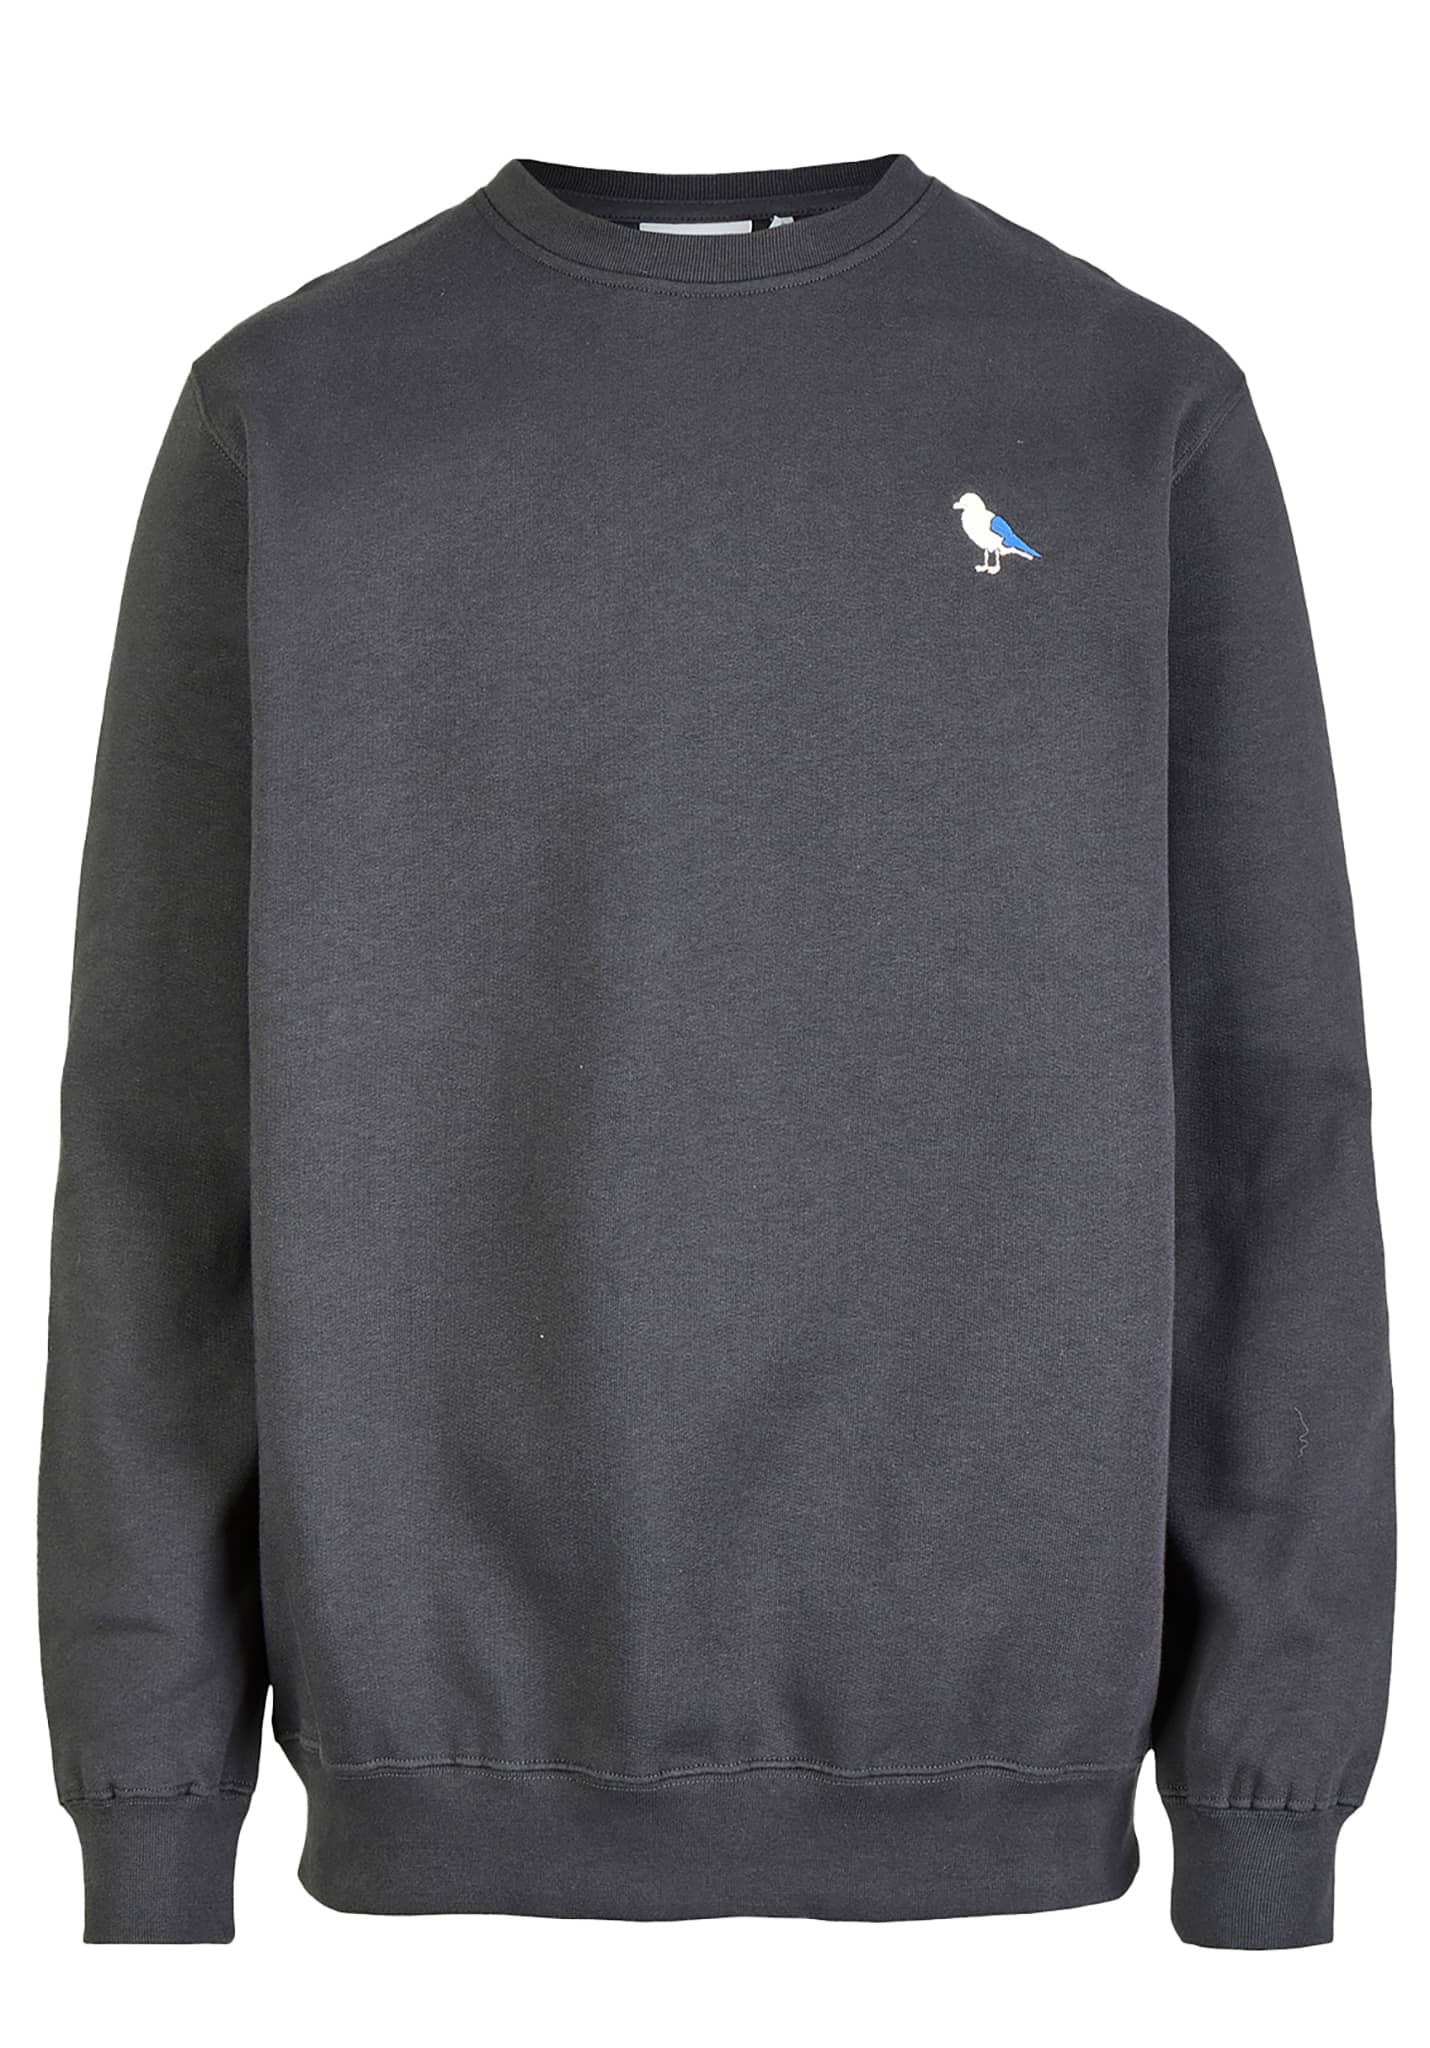 Cleptomanicx Embro Gull Sweatshirt blue graphite XXL